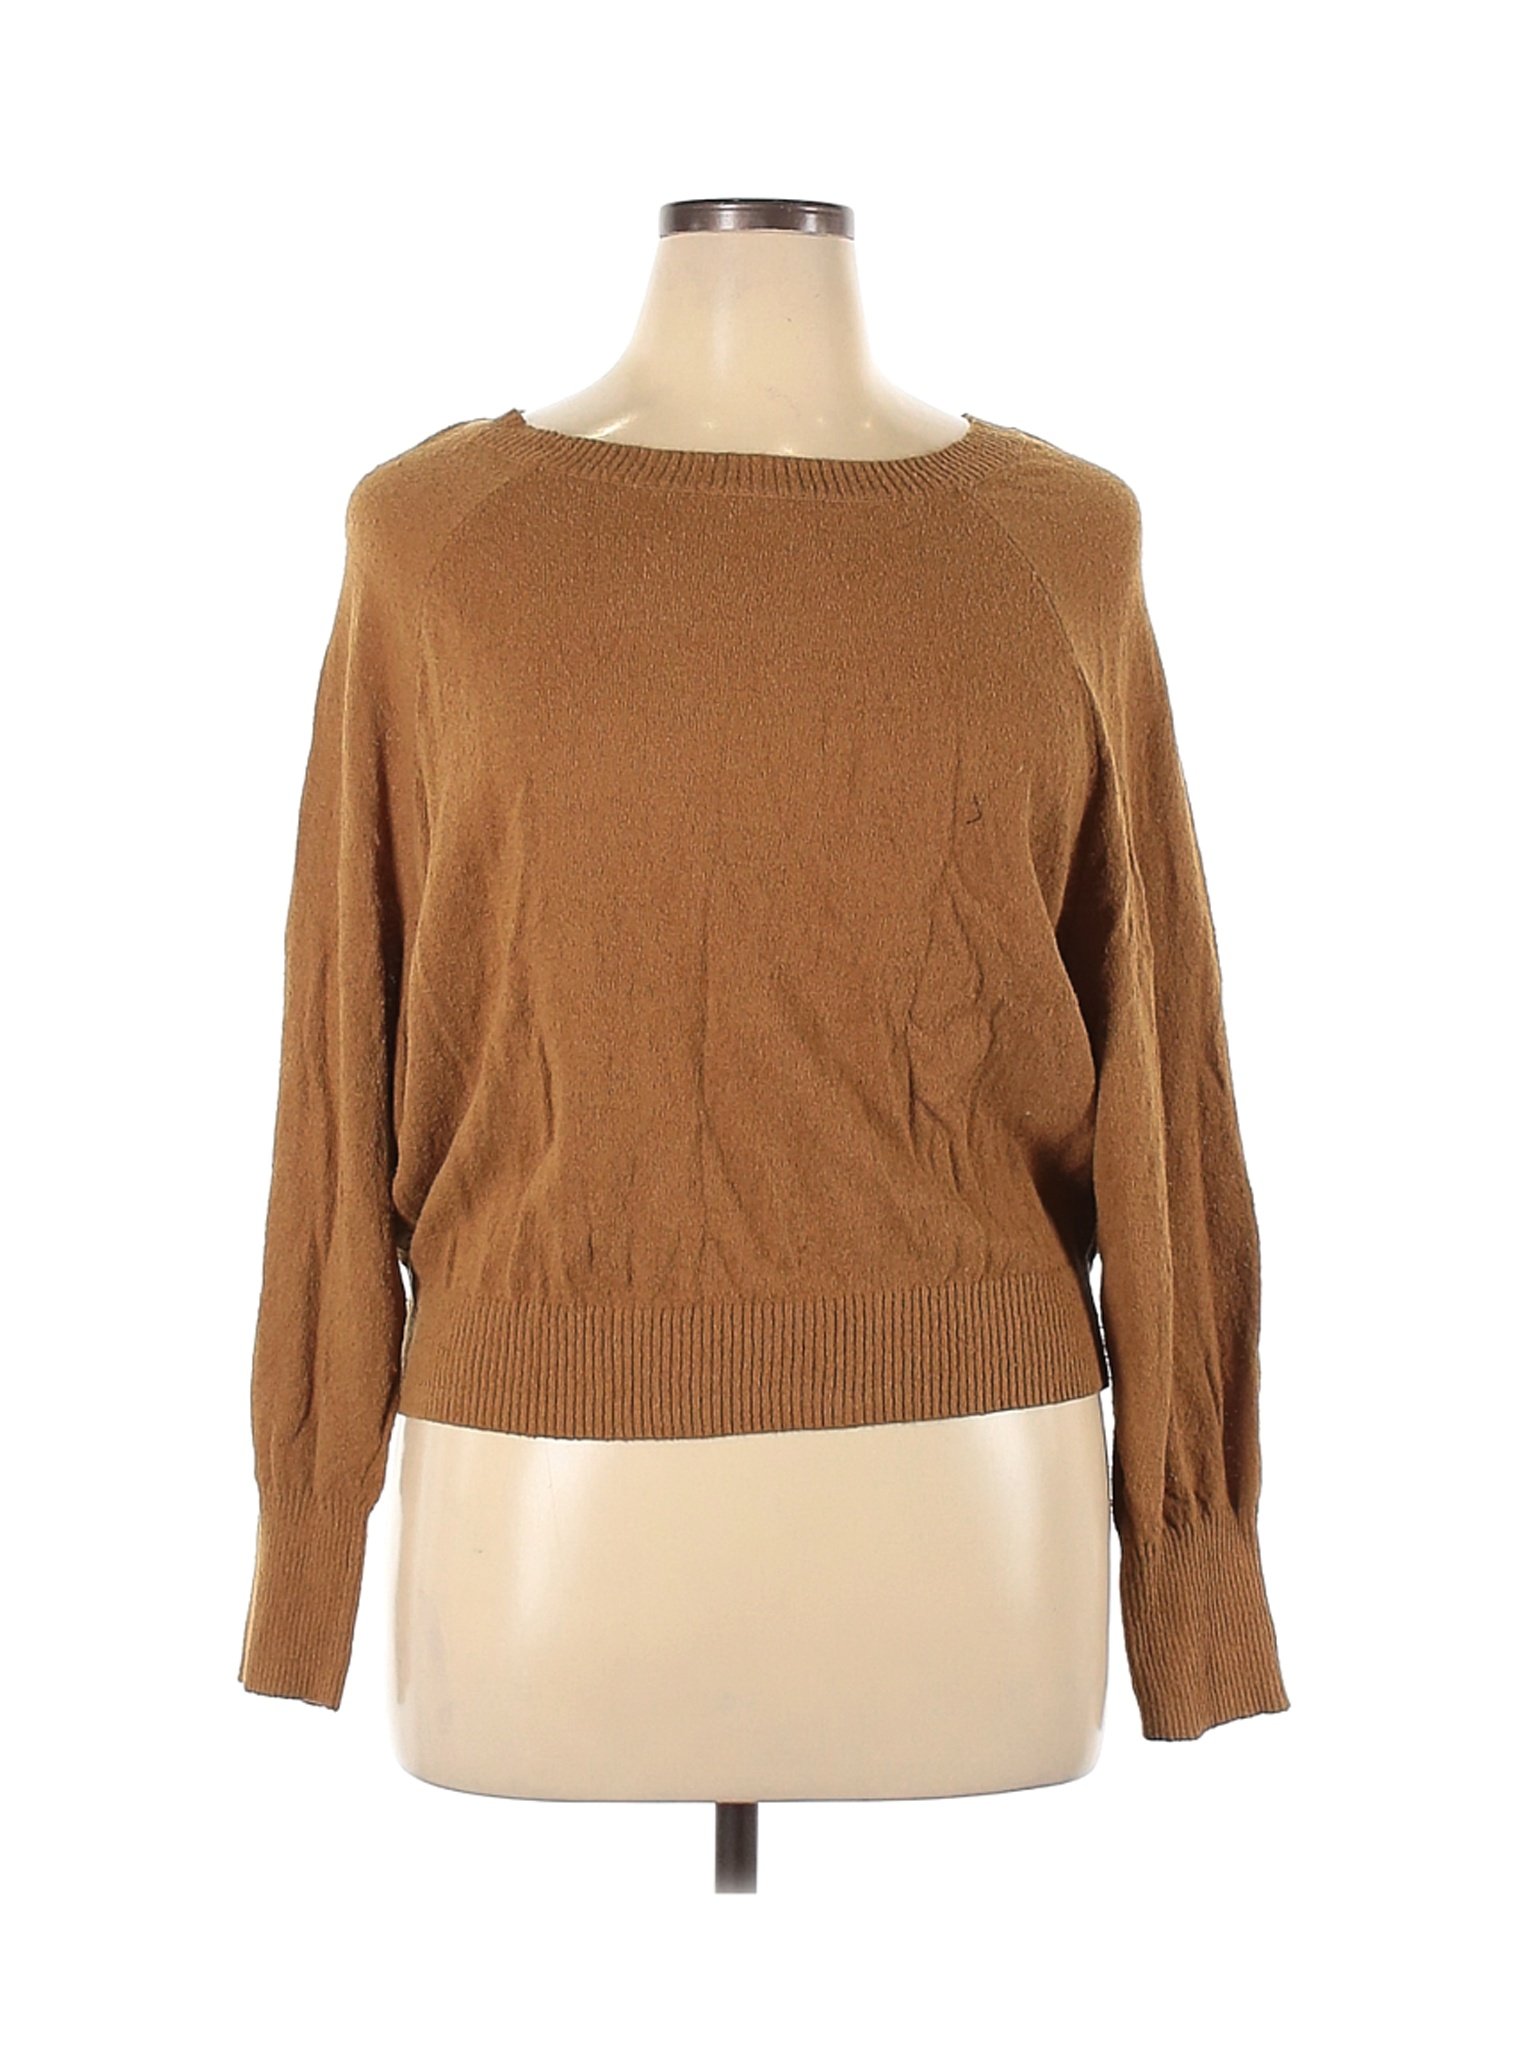 NWT O'Neill Women Brown Pullover Sweater XL | eBay